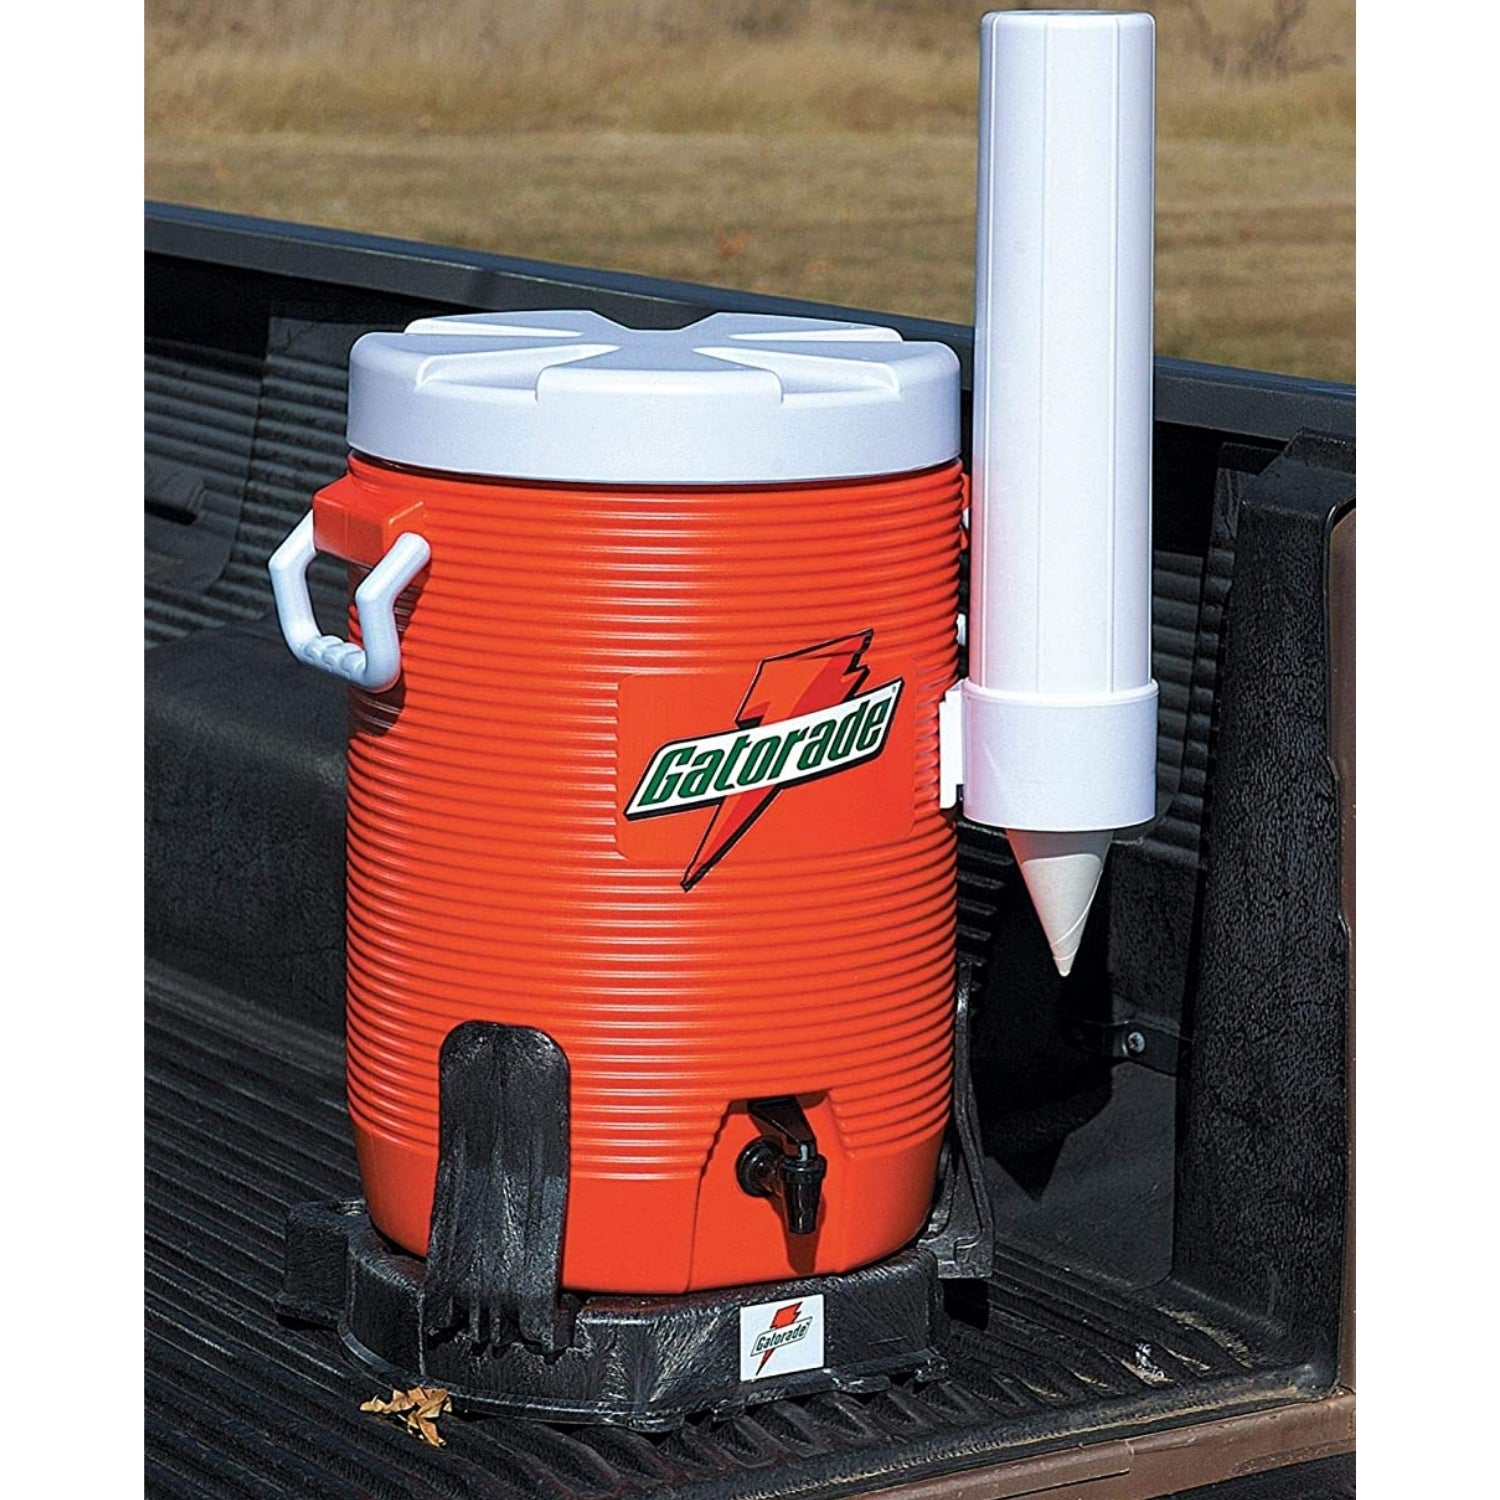 Gatorade 49201- Beverage Cooler w/Cup Dispenser, 5 gal, Orange/White